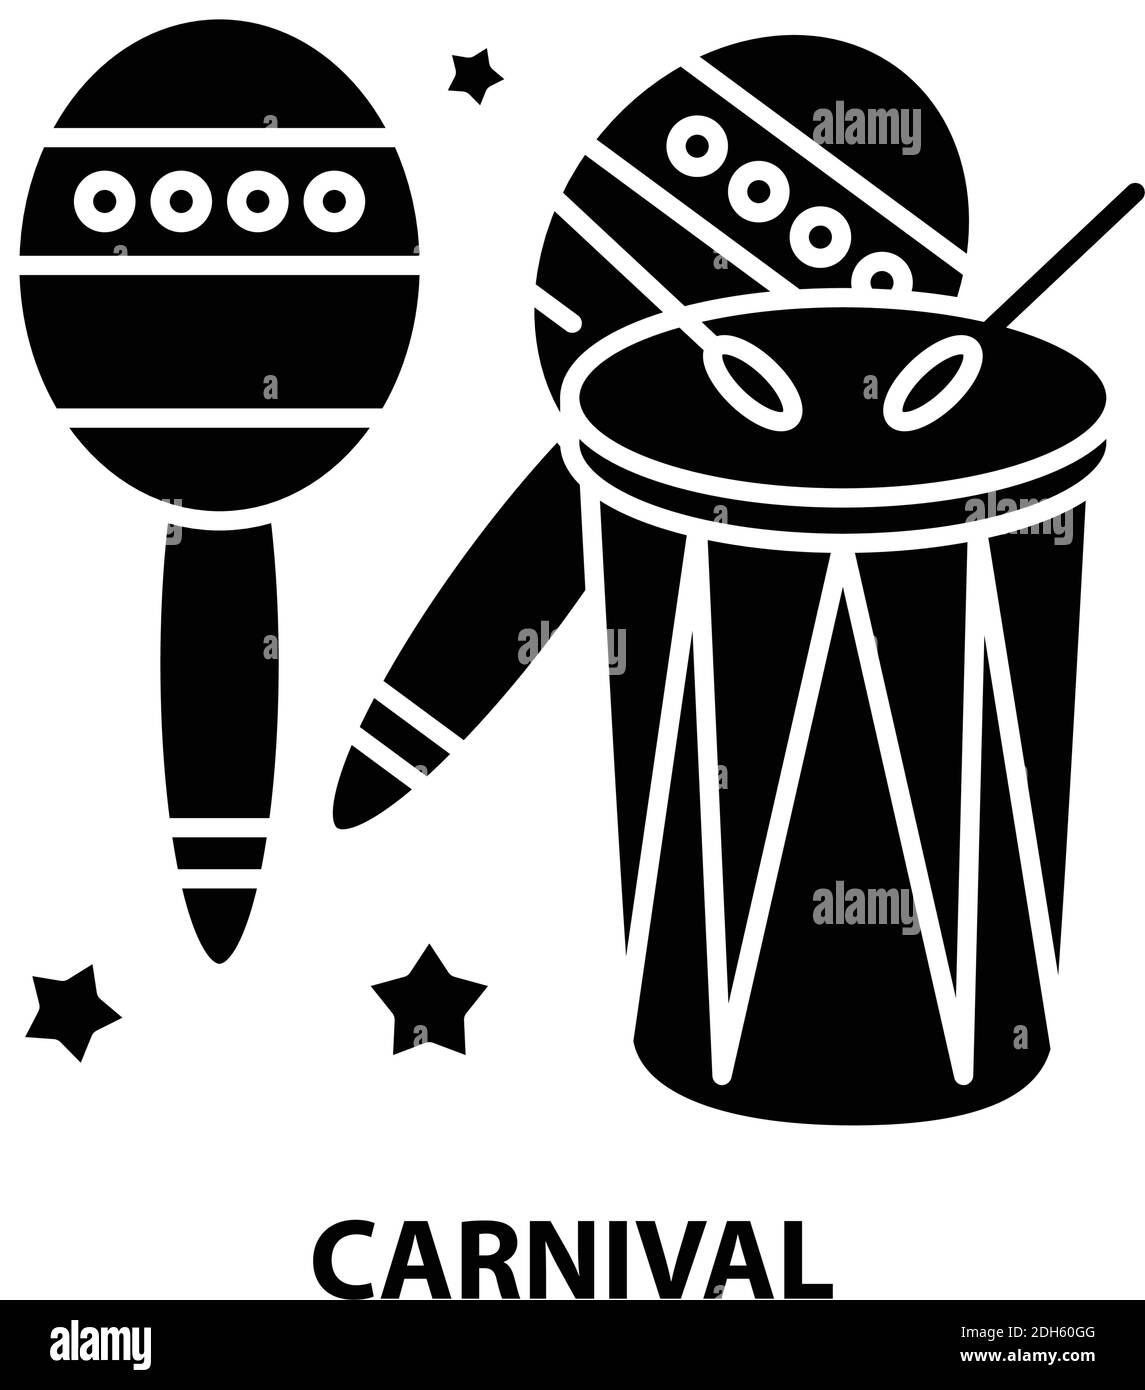 carnival icon, black vector sign with editable strokes, concept illustration Stock Vector